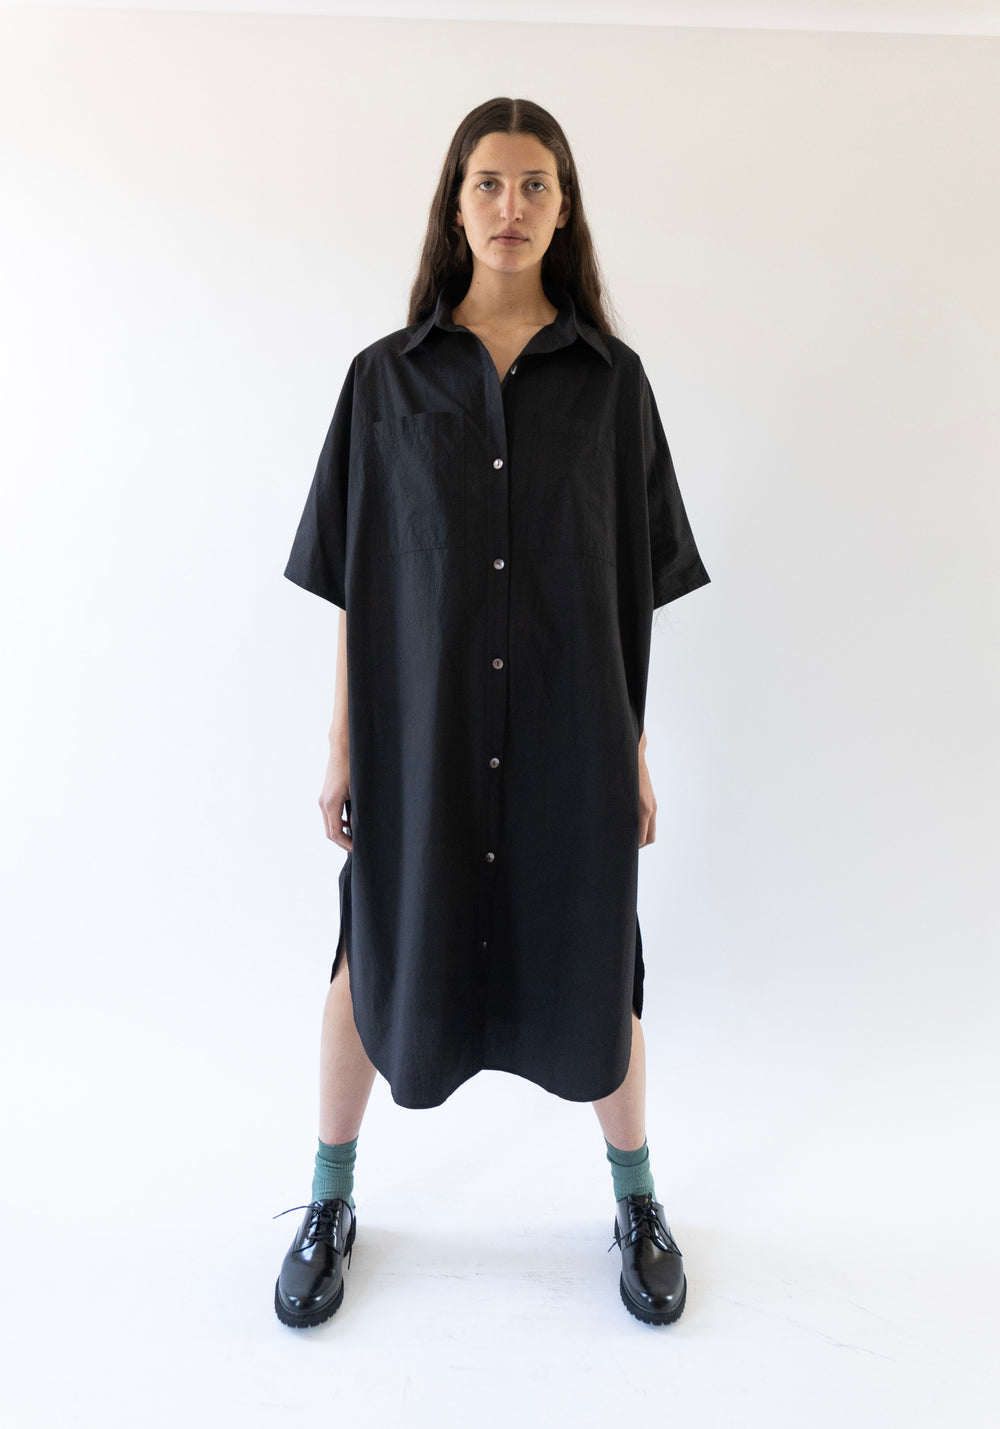 Amada Short-Sleeve Dress in Onyx